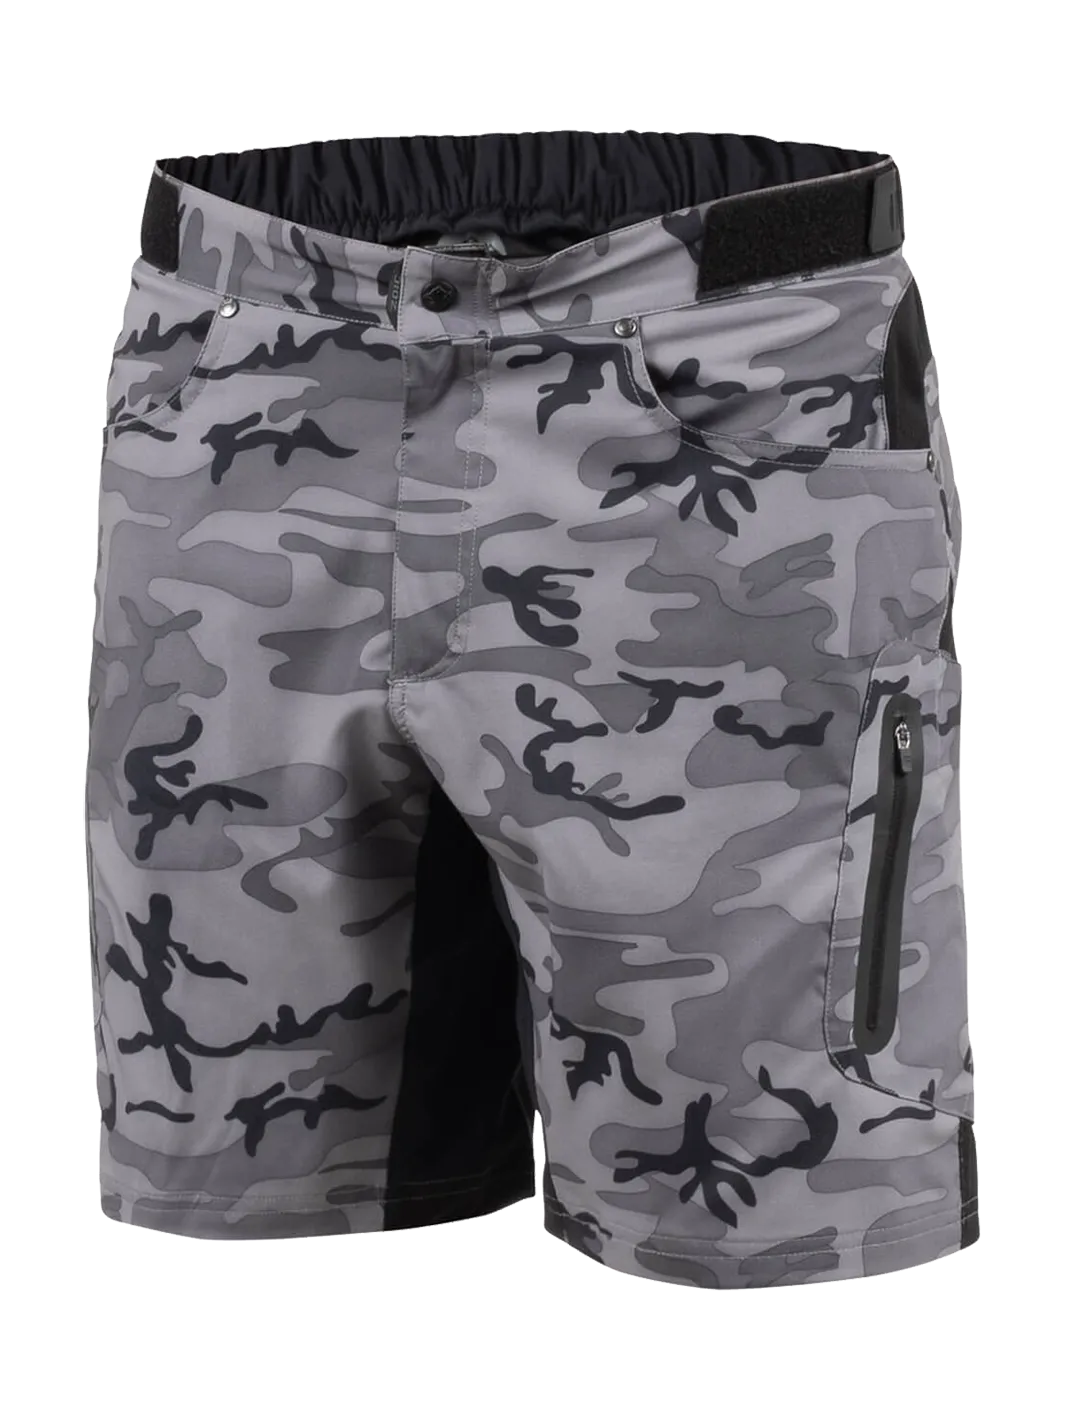 Zoic Ether 9 Camo Short - Men's Black Ops, XL